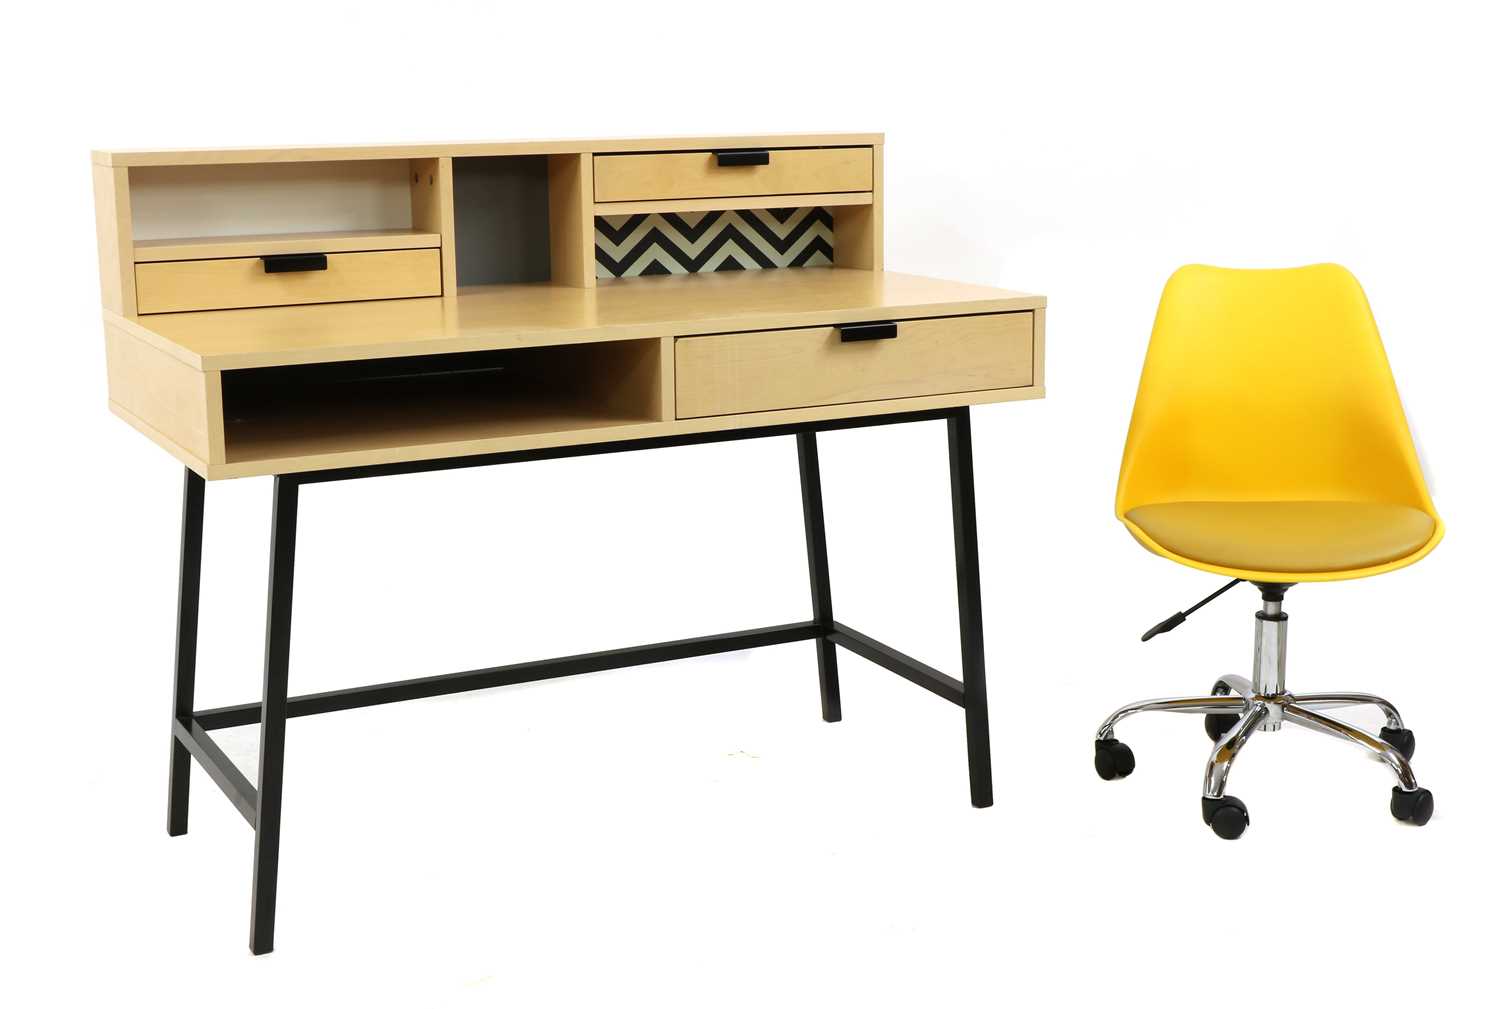 A modern office desk by Maisons du Monde, - Image 4 of 4